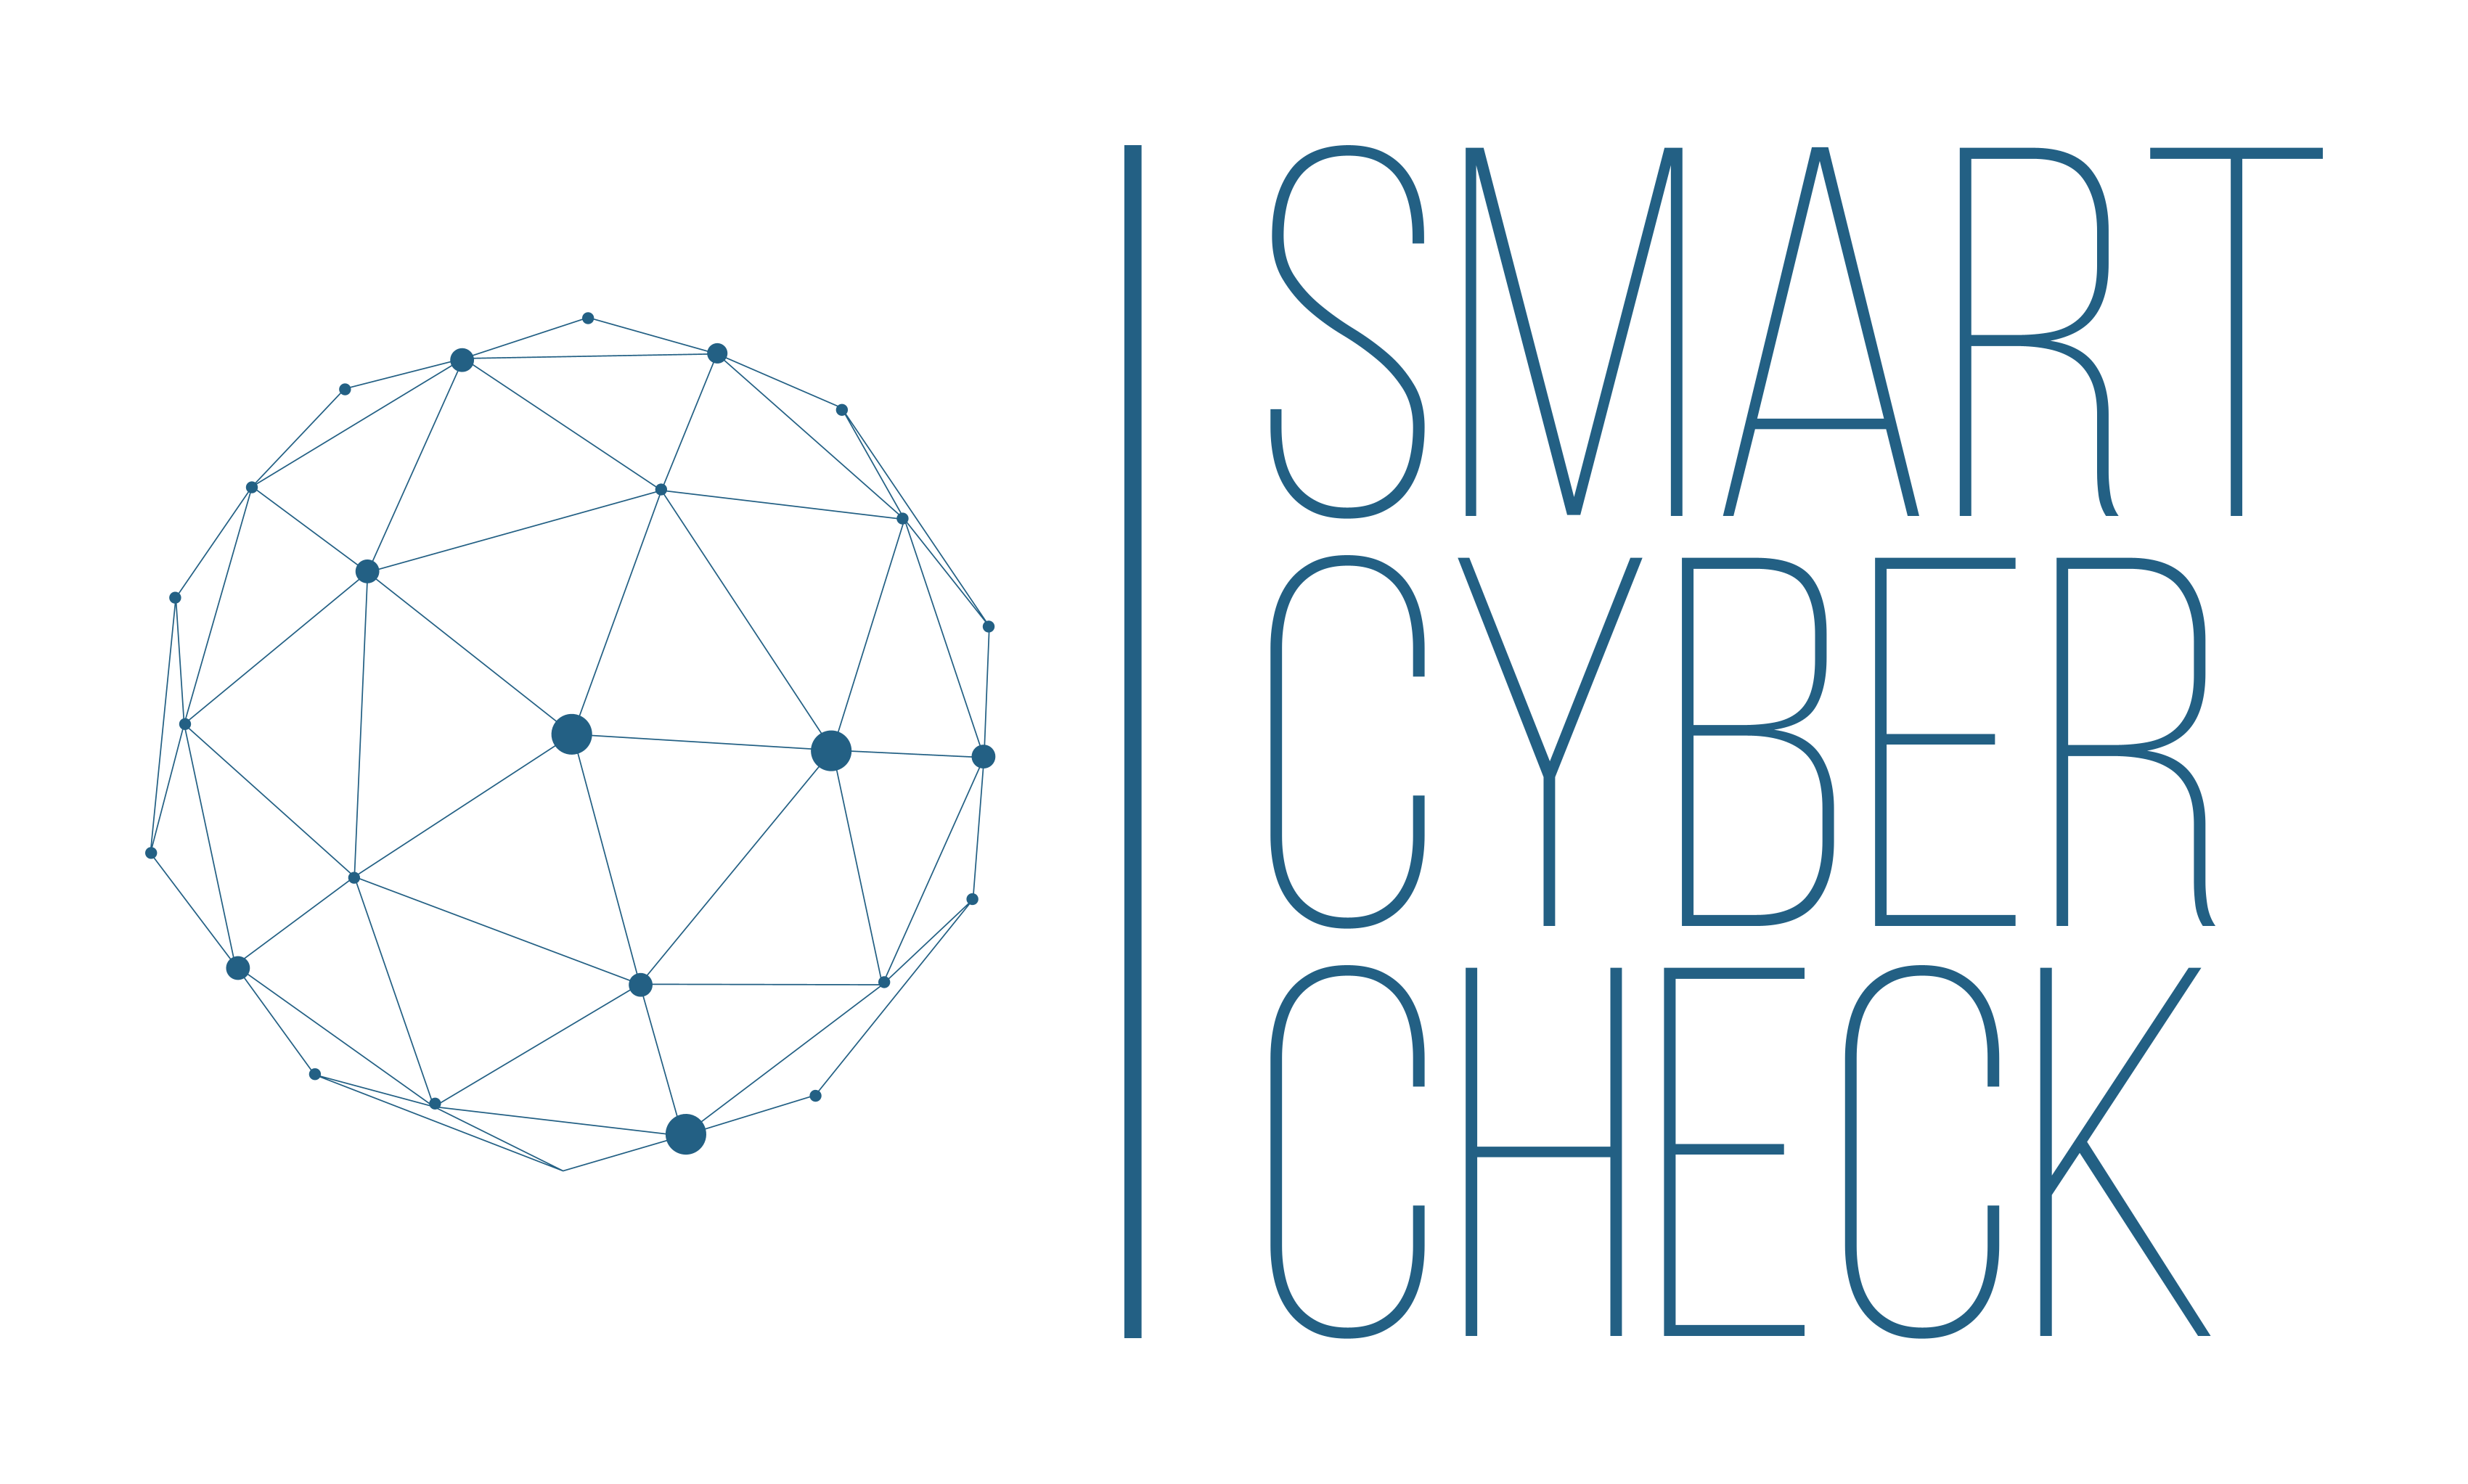 Smart Cyber Check logo